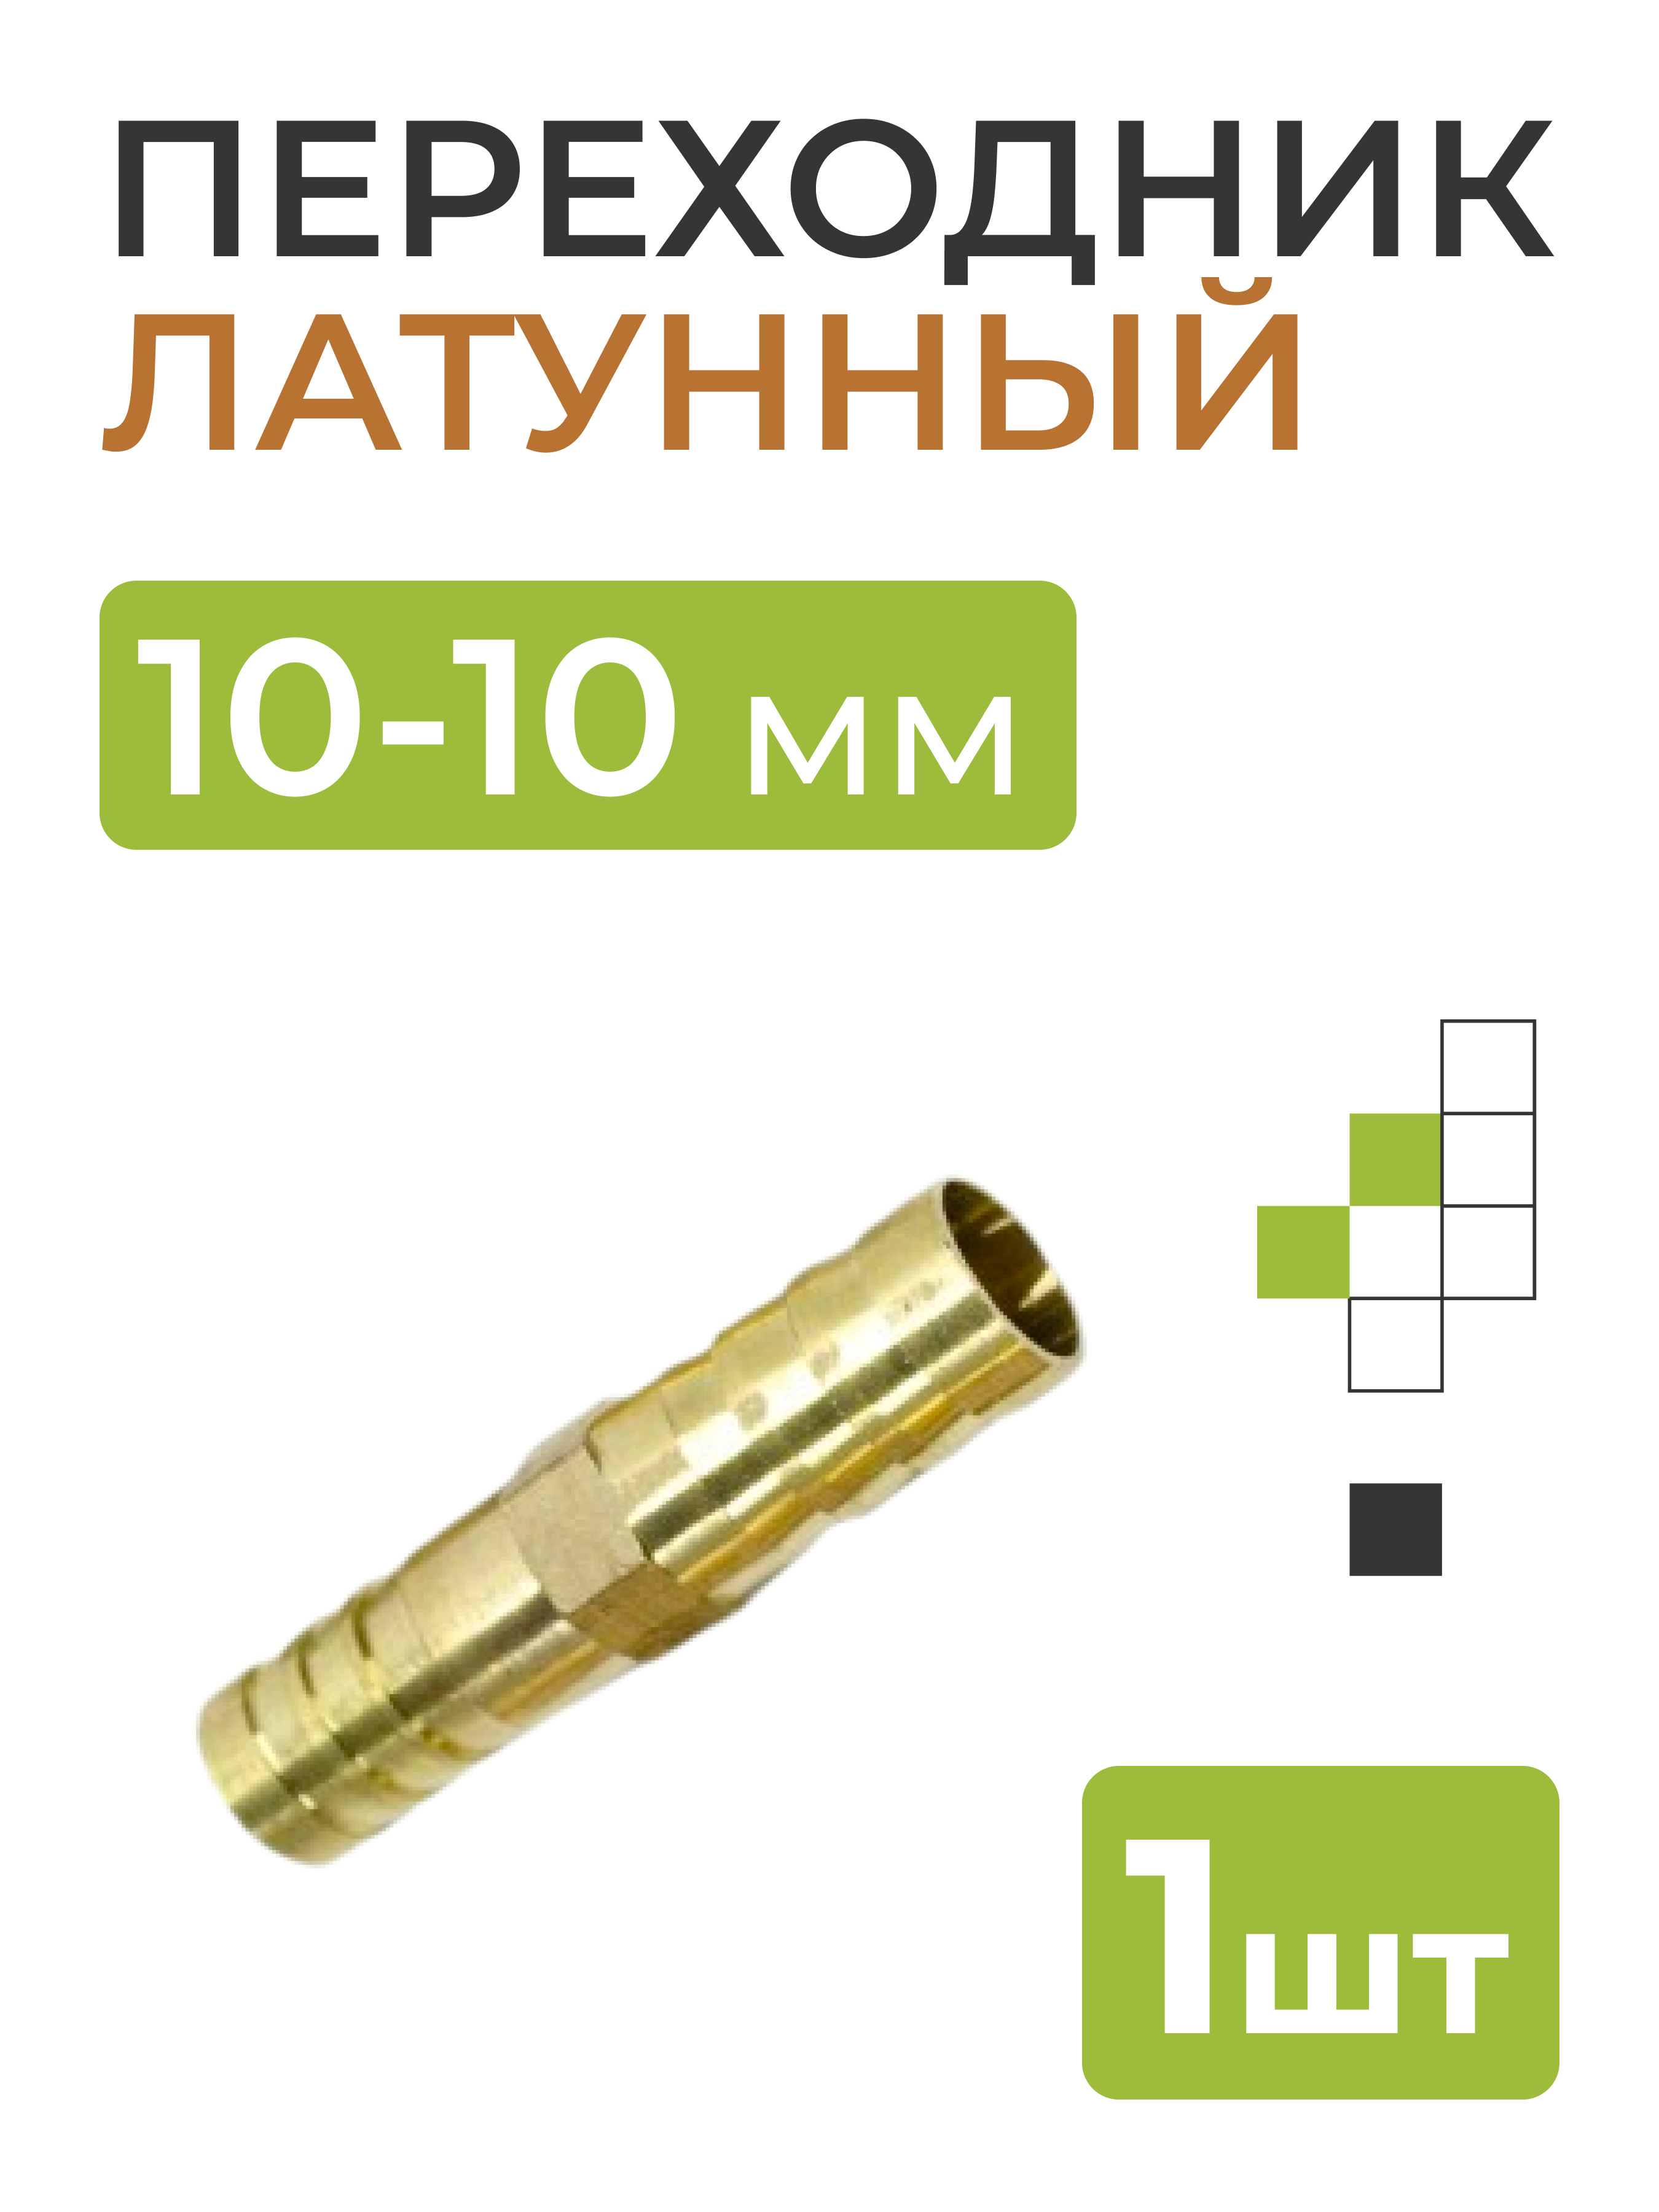 Переходник латунный 10-10 мм